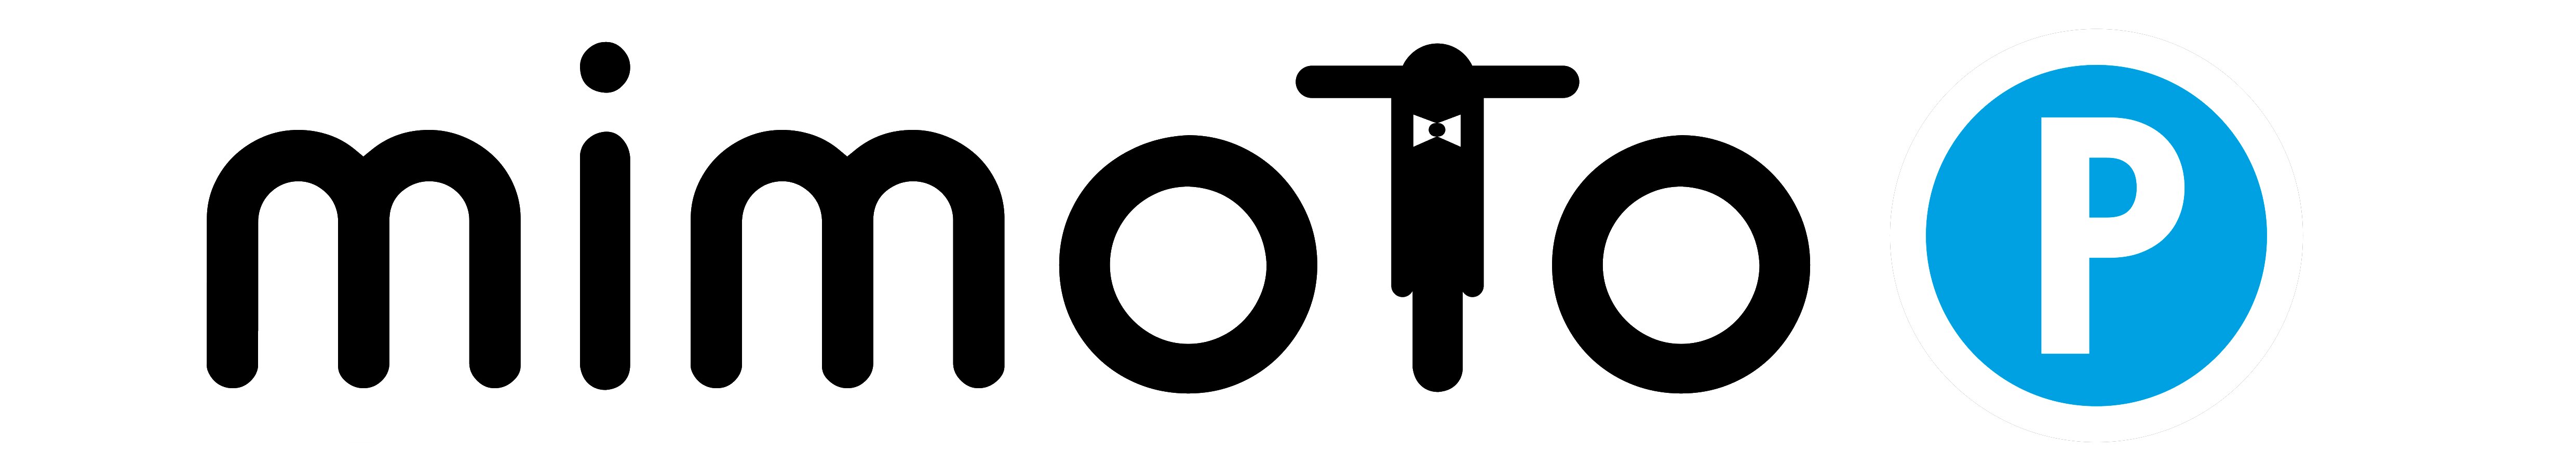 Logotipo Mimoto